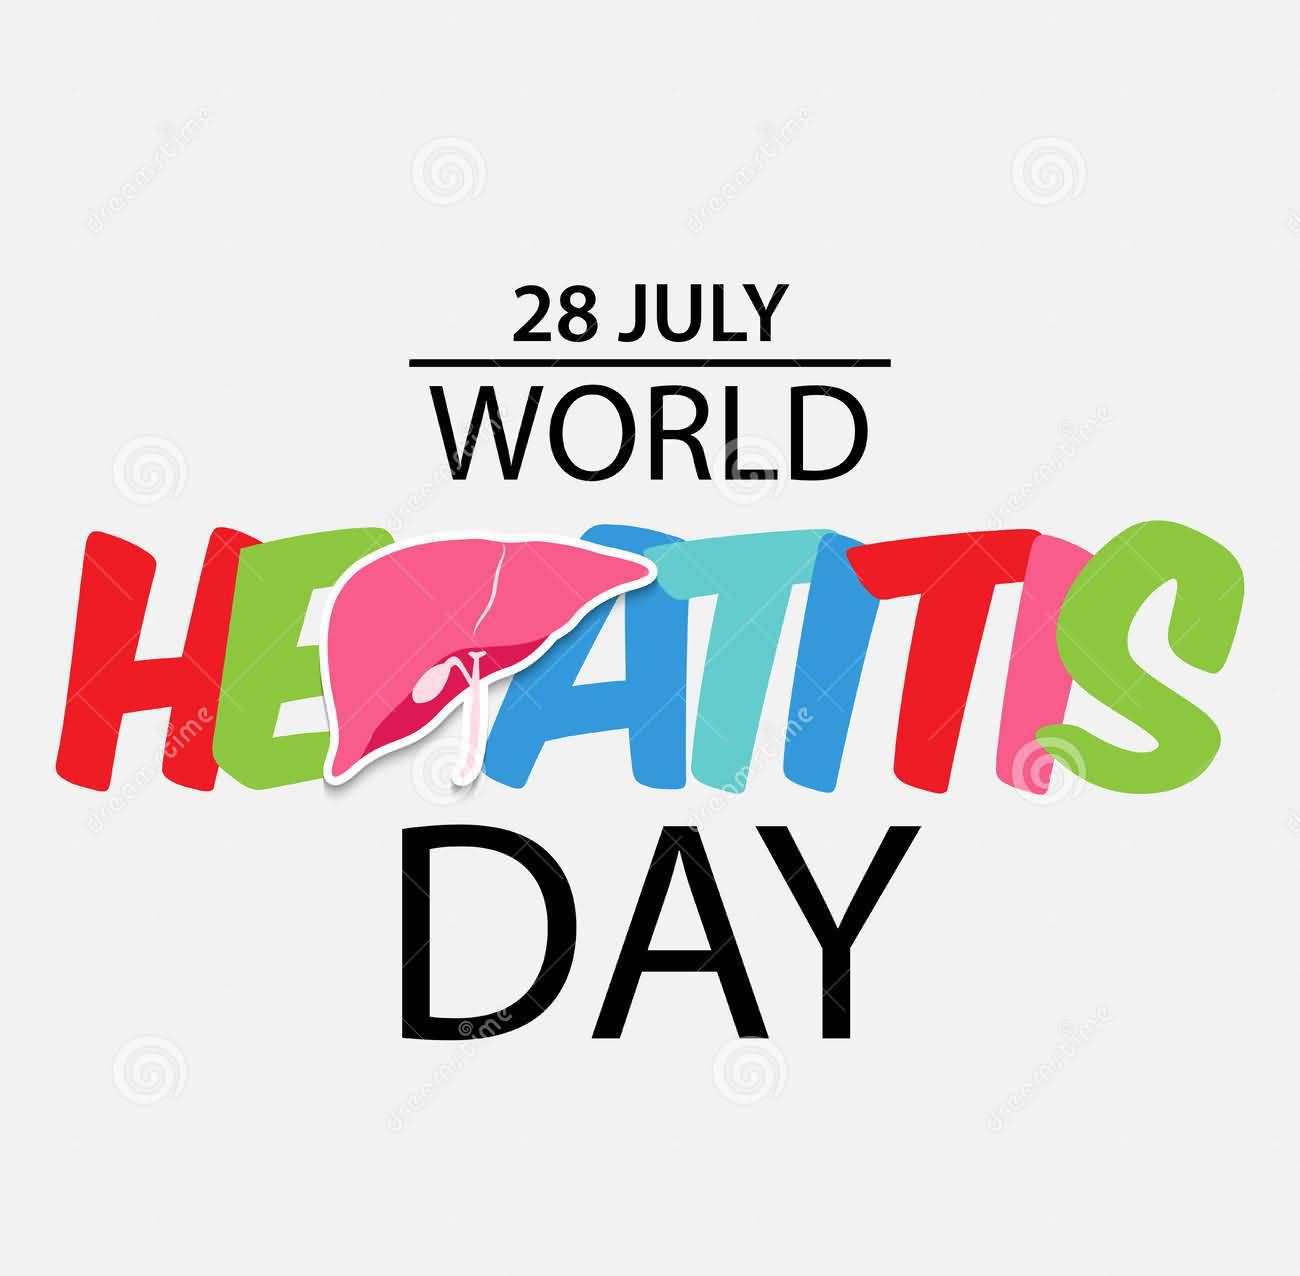 28 July World Hepatitis Day